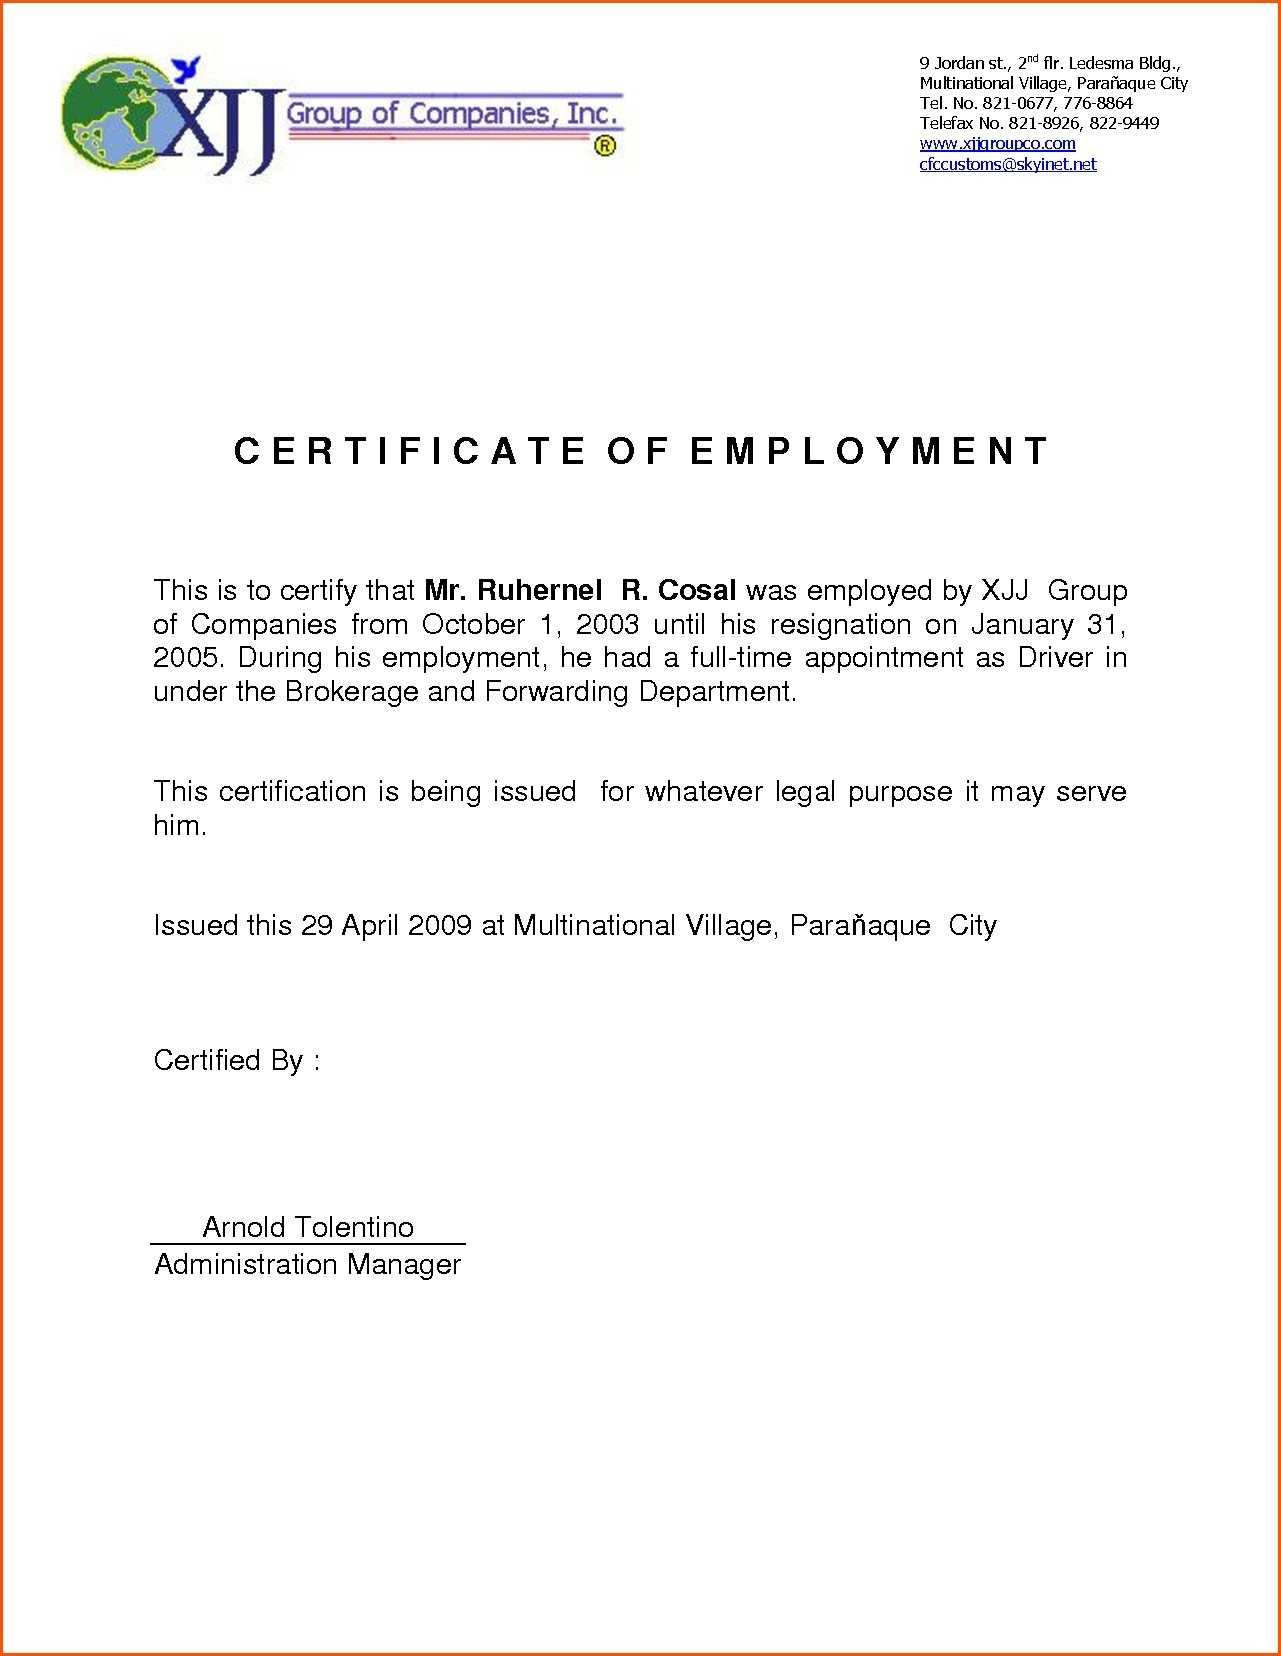 Certificates: Stunning Certificate Of Employment Template With Template Of Certificate Of Employment